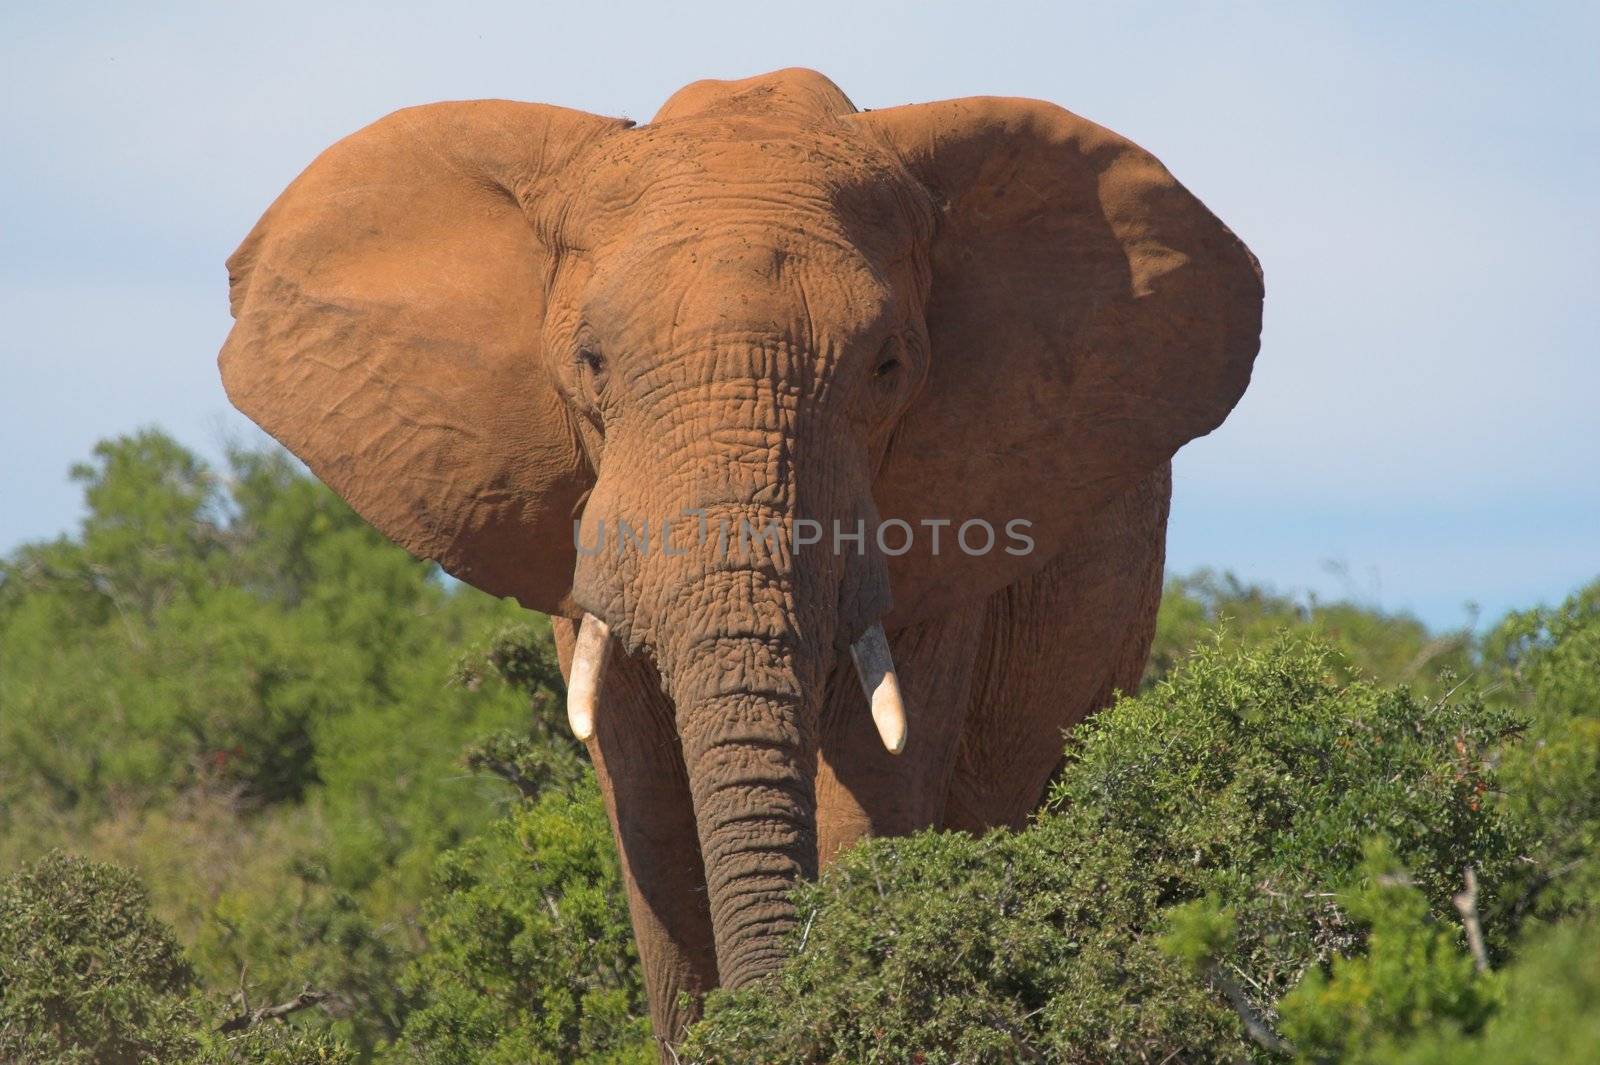 African Elephant with Ears Spread by nightowlza